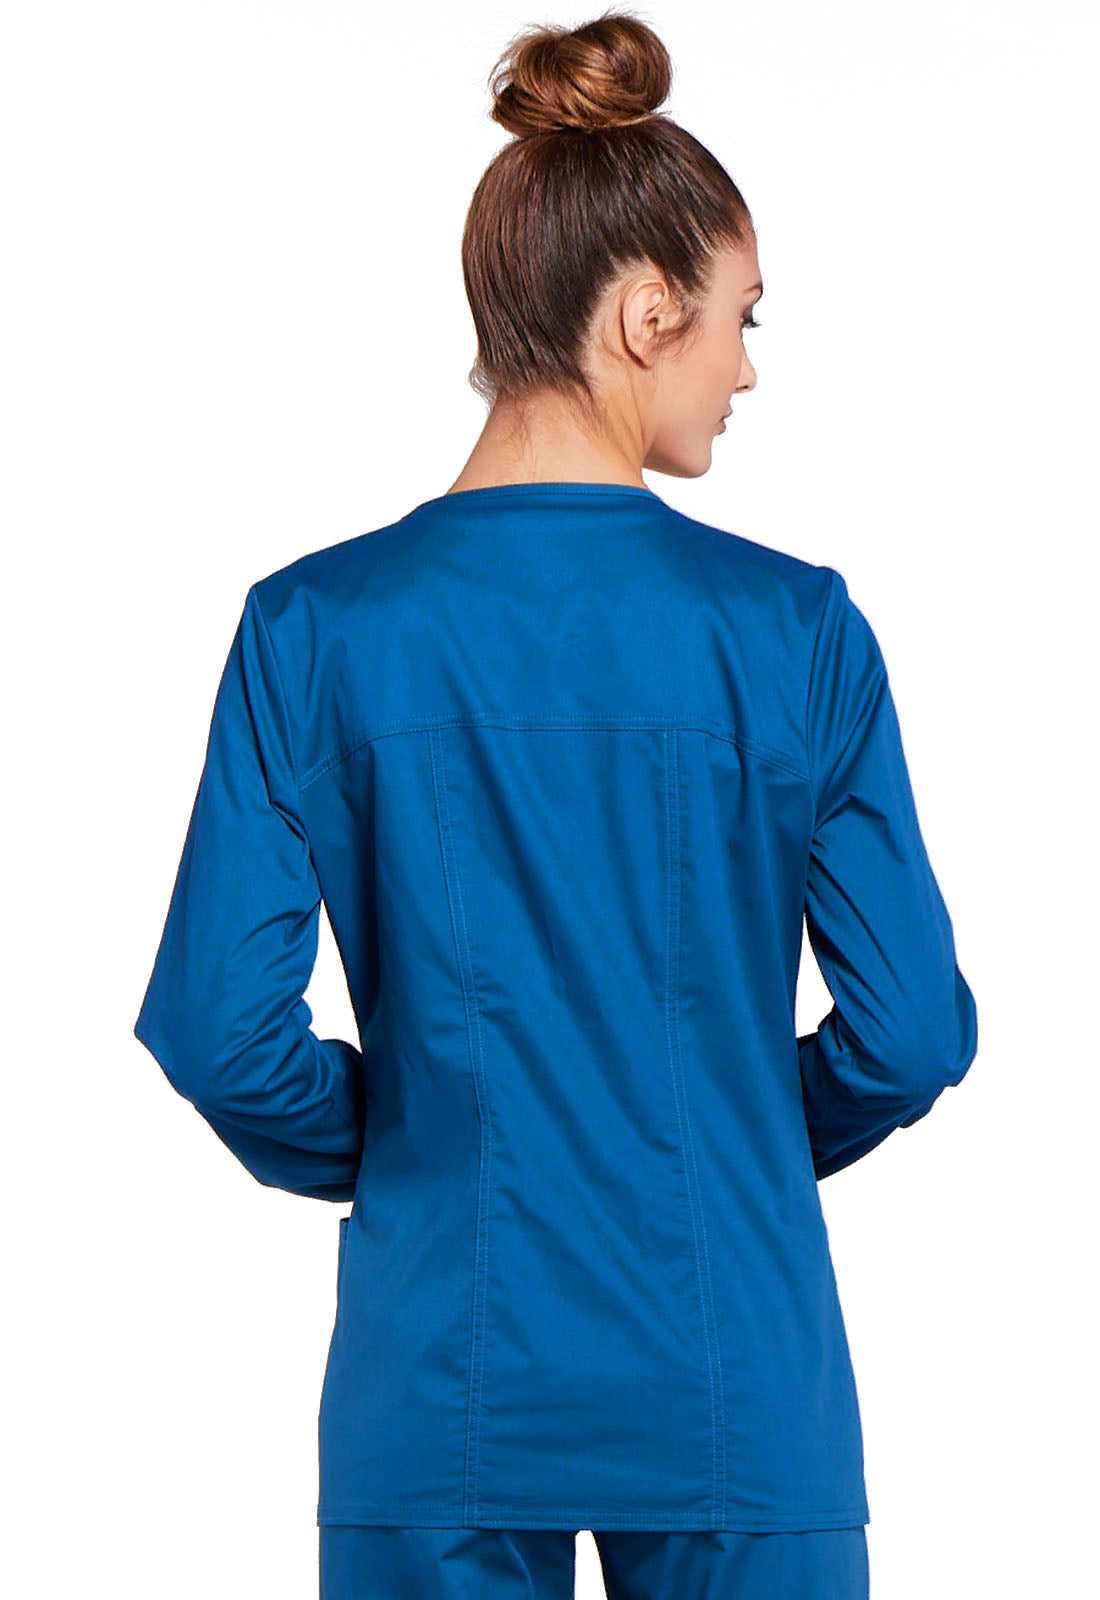 Women's 3-Pocket Zip Front Scrub Jacket